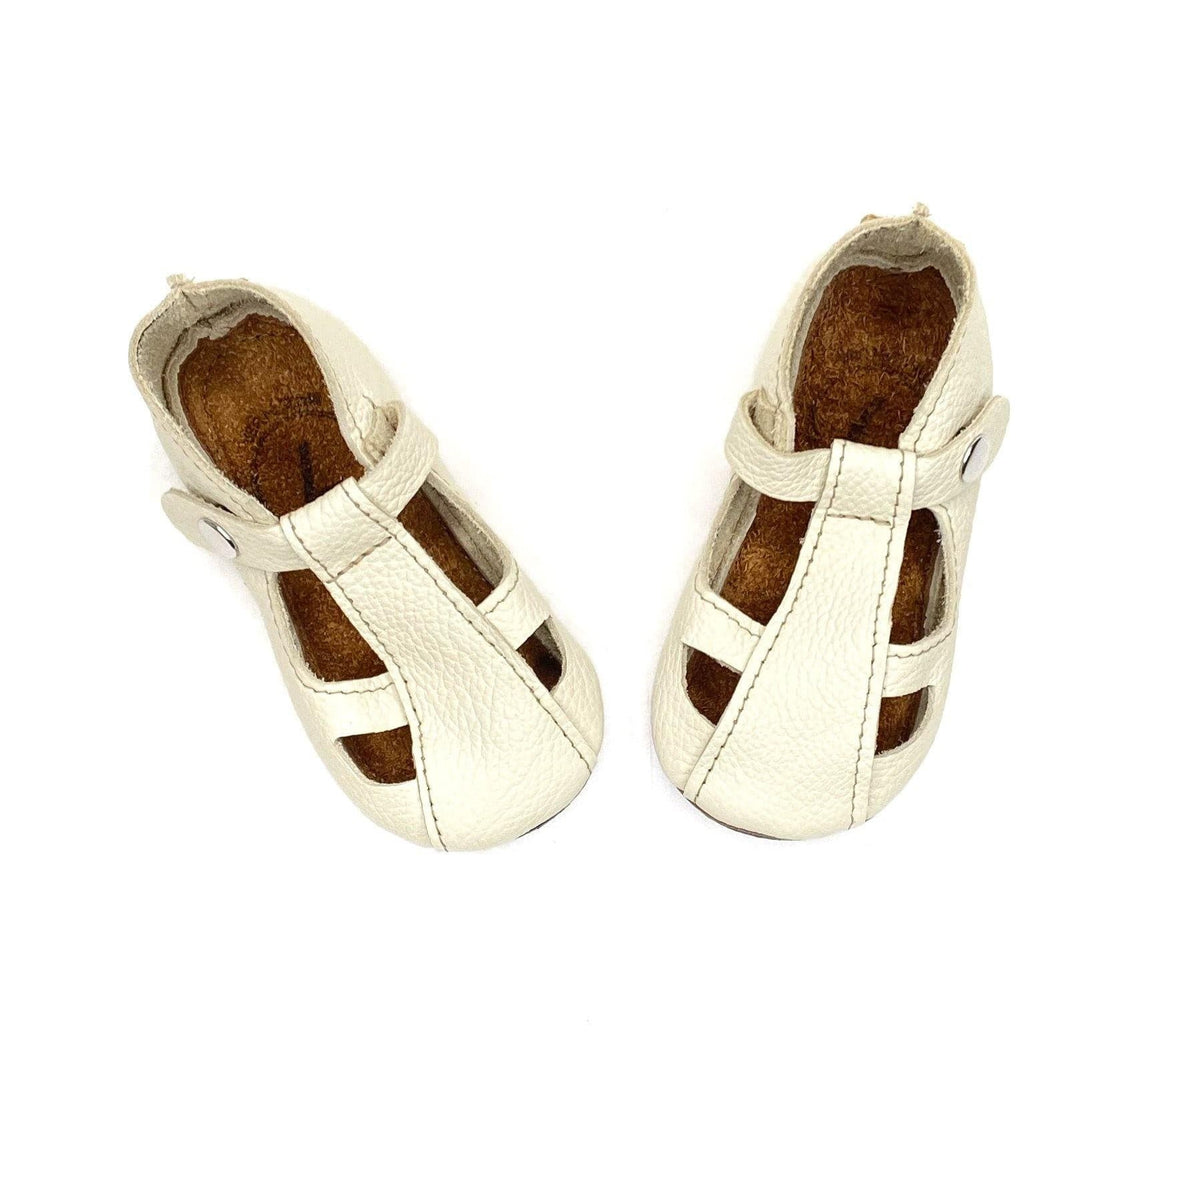 Duchess and Fox Eggshell Sandals handmade barefoot shoes